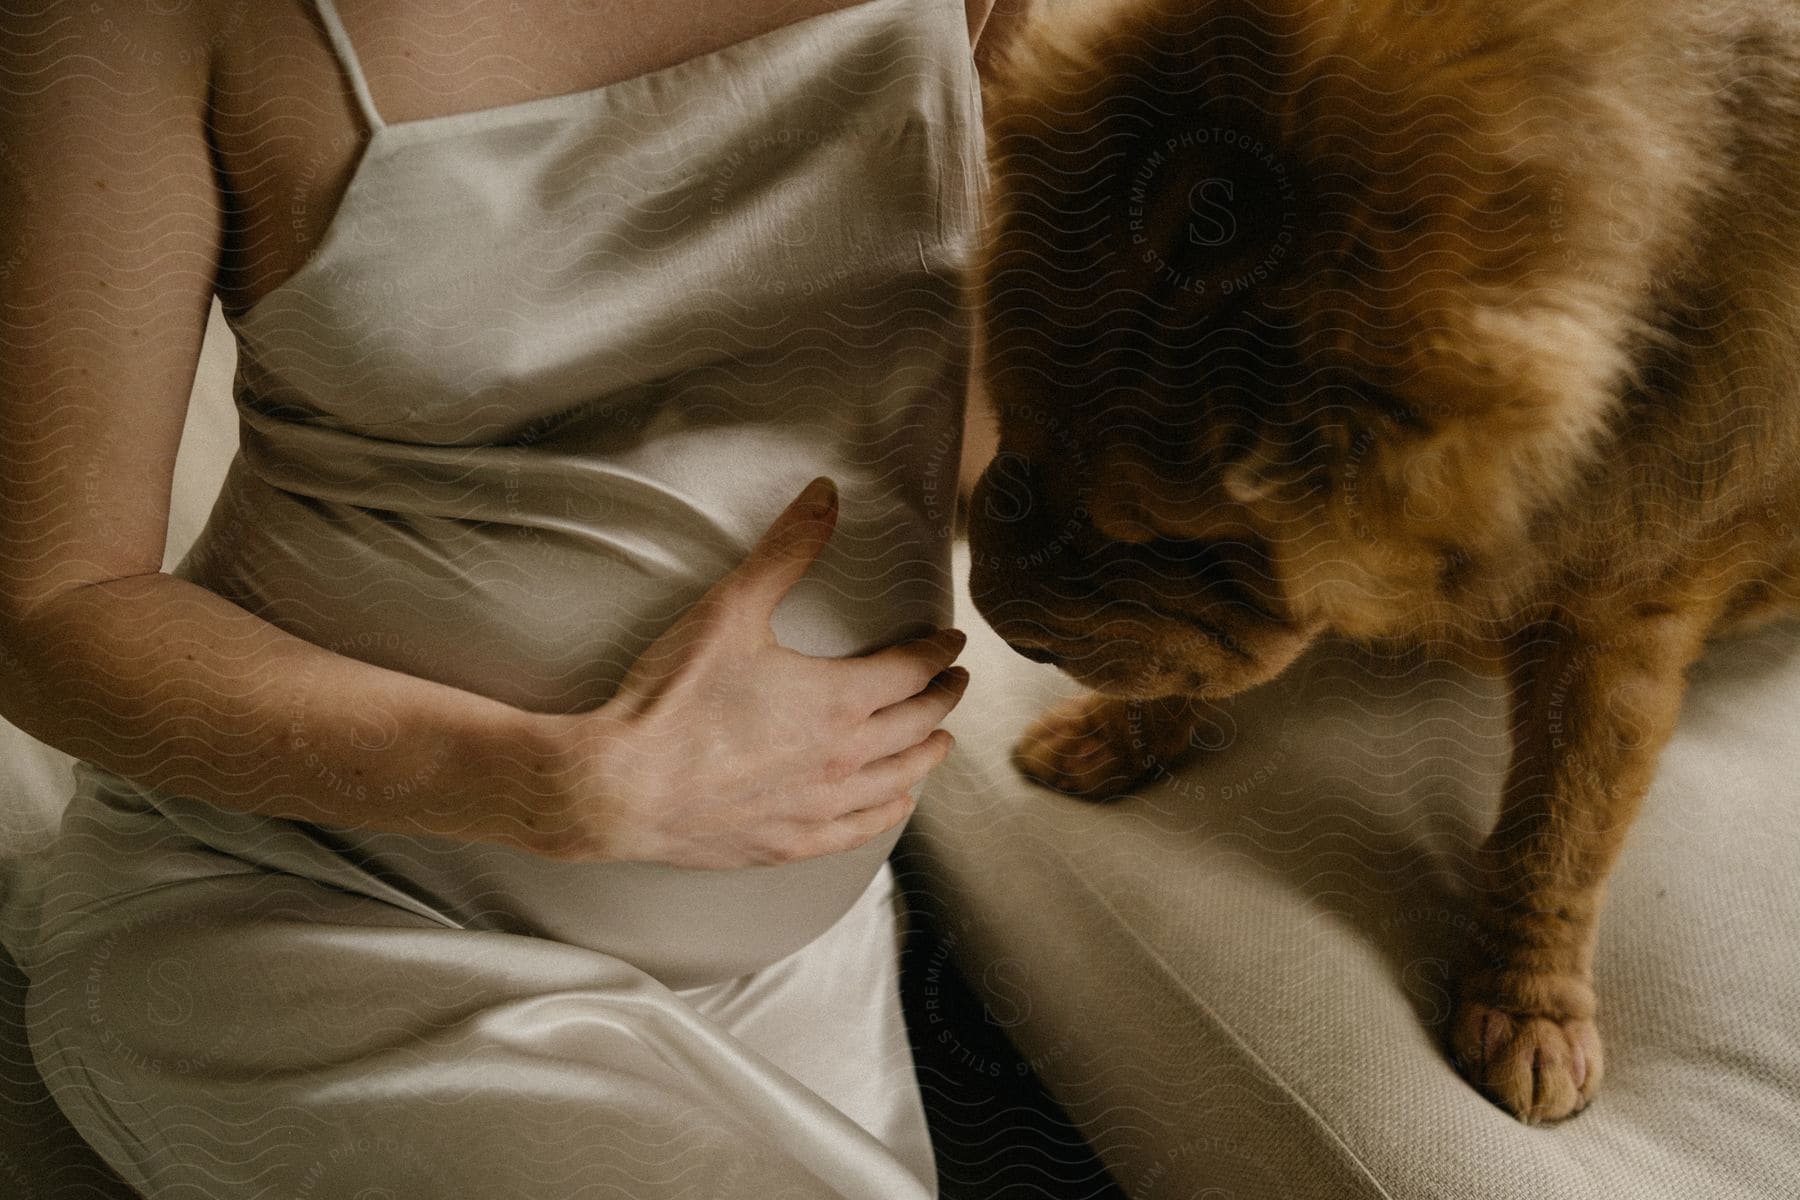 Pregnant woman touches her abdomen next to shaggy dog.